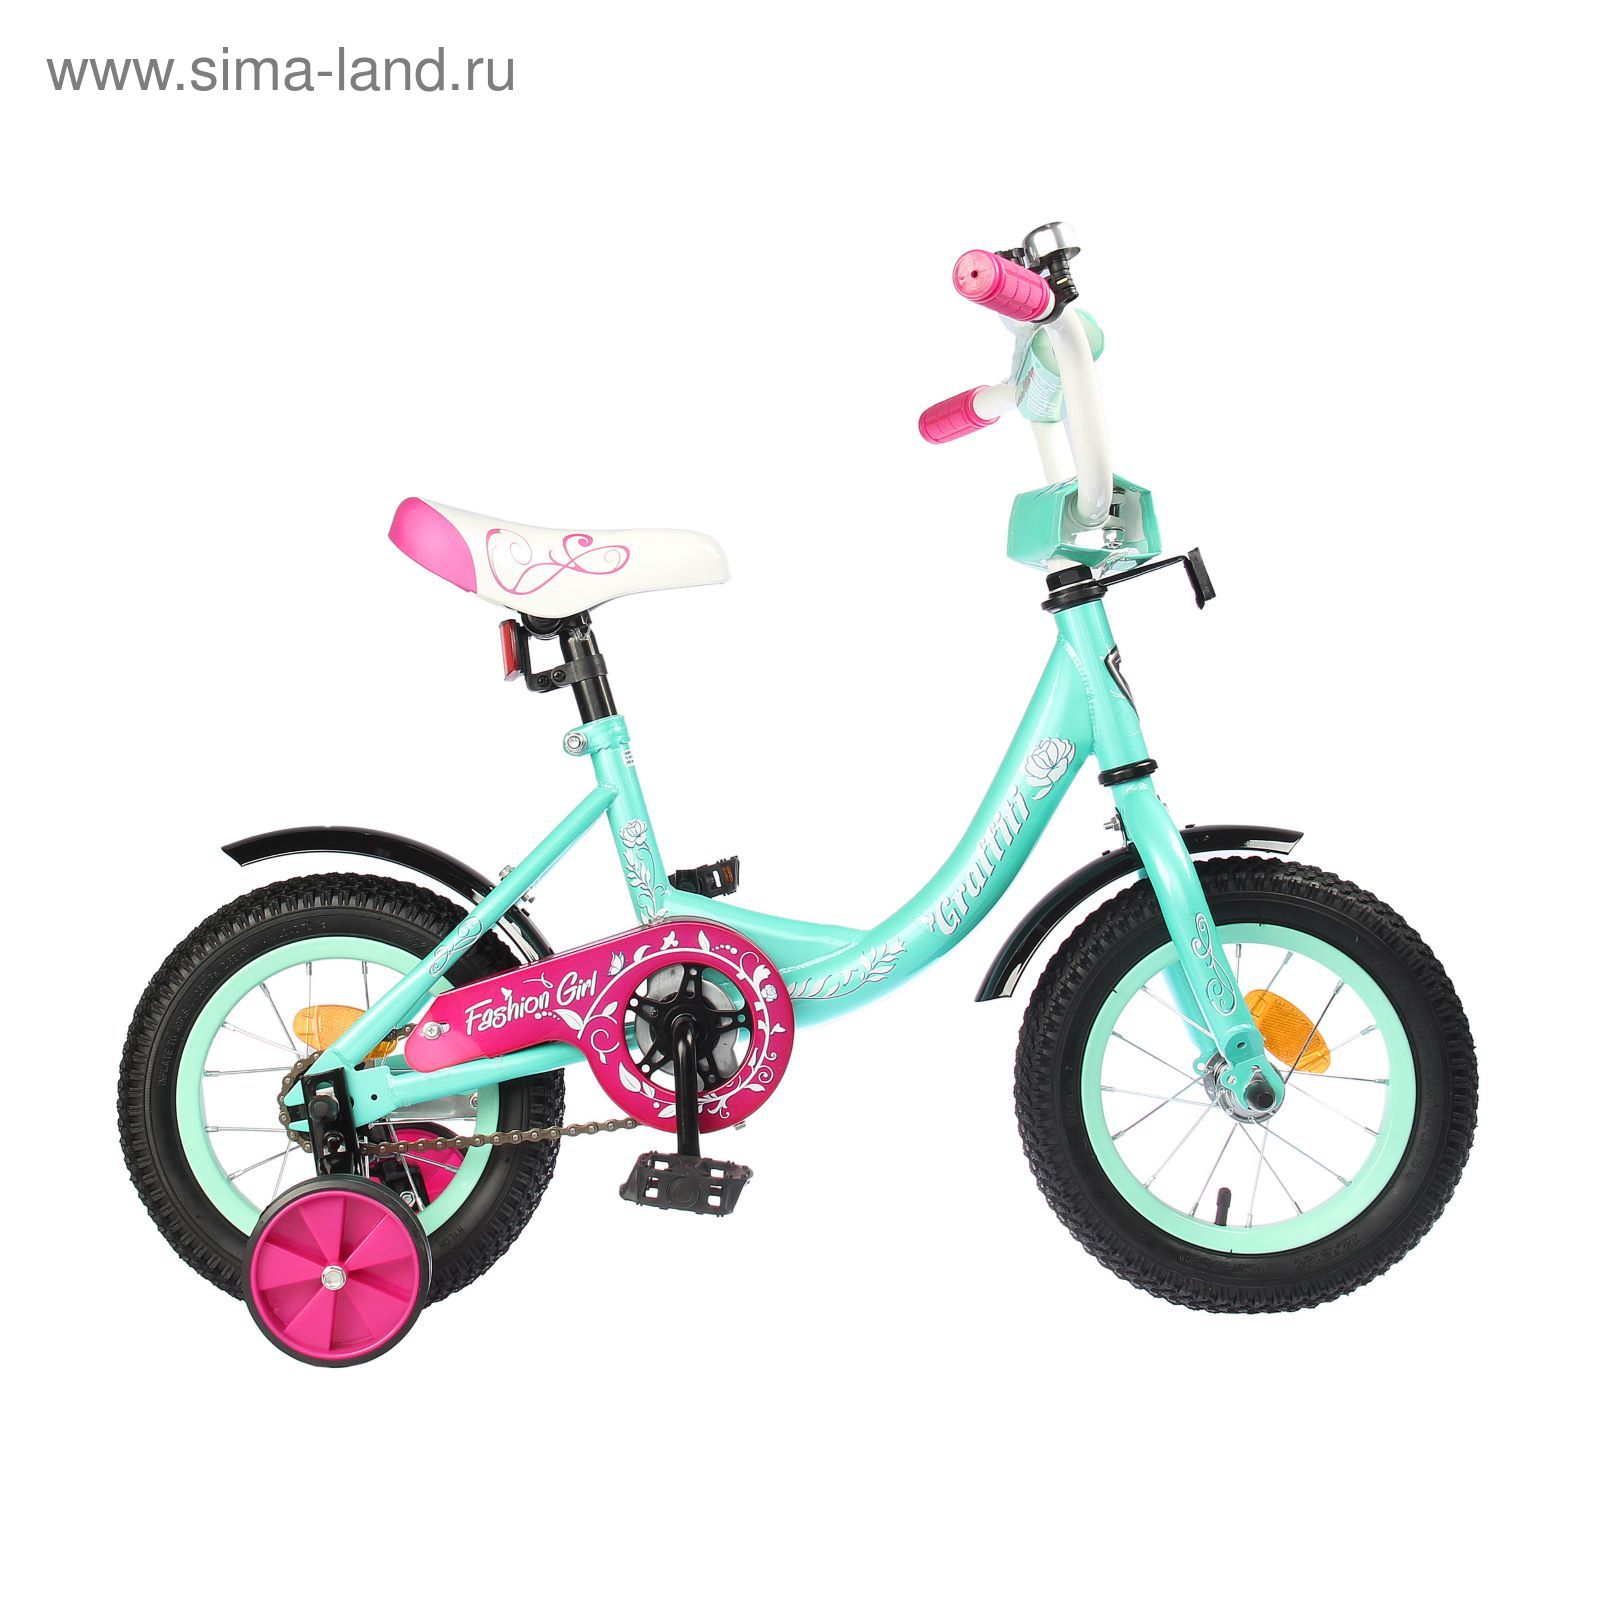 Велосипед 12" GRAFFITI Fashion Girl RUS, 2017, цвет бирюзовый